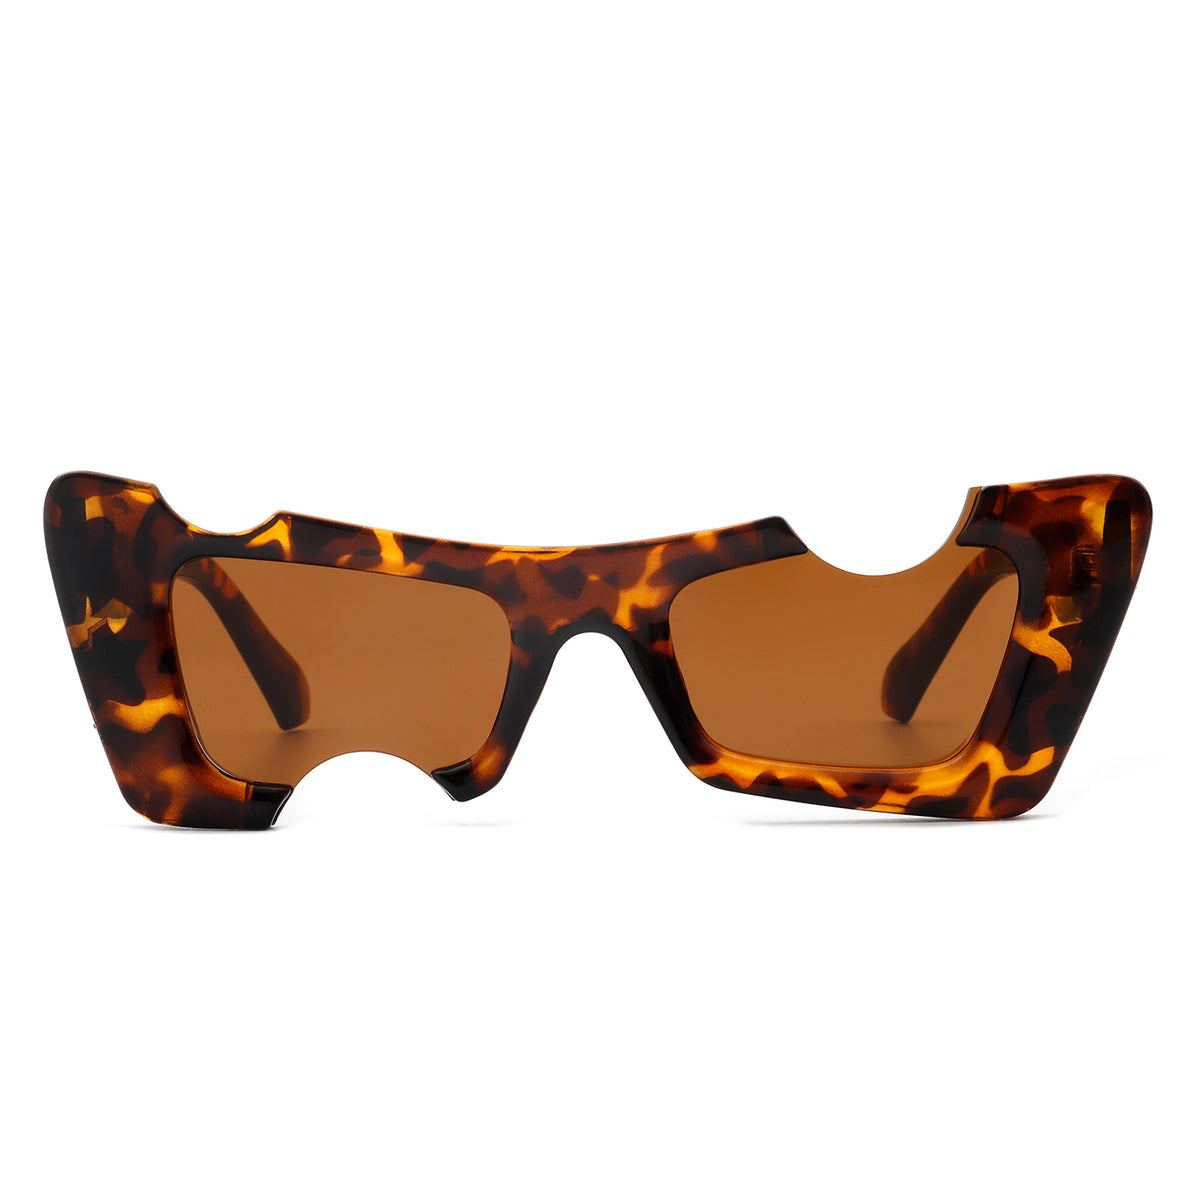 HS2109 - Irregular Square Fashion Cut-Out Tinted Sunglasses